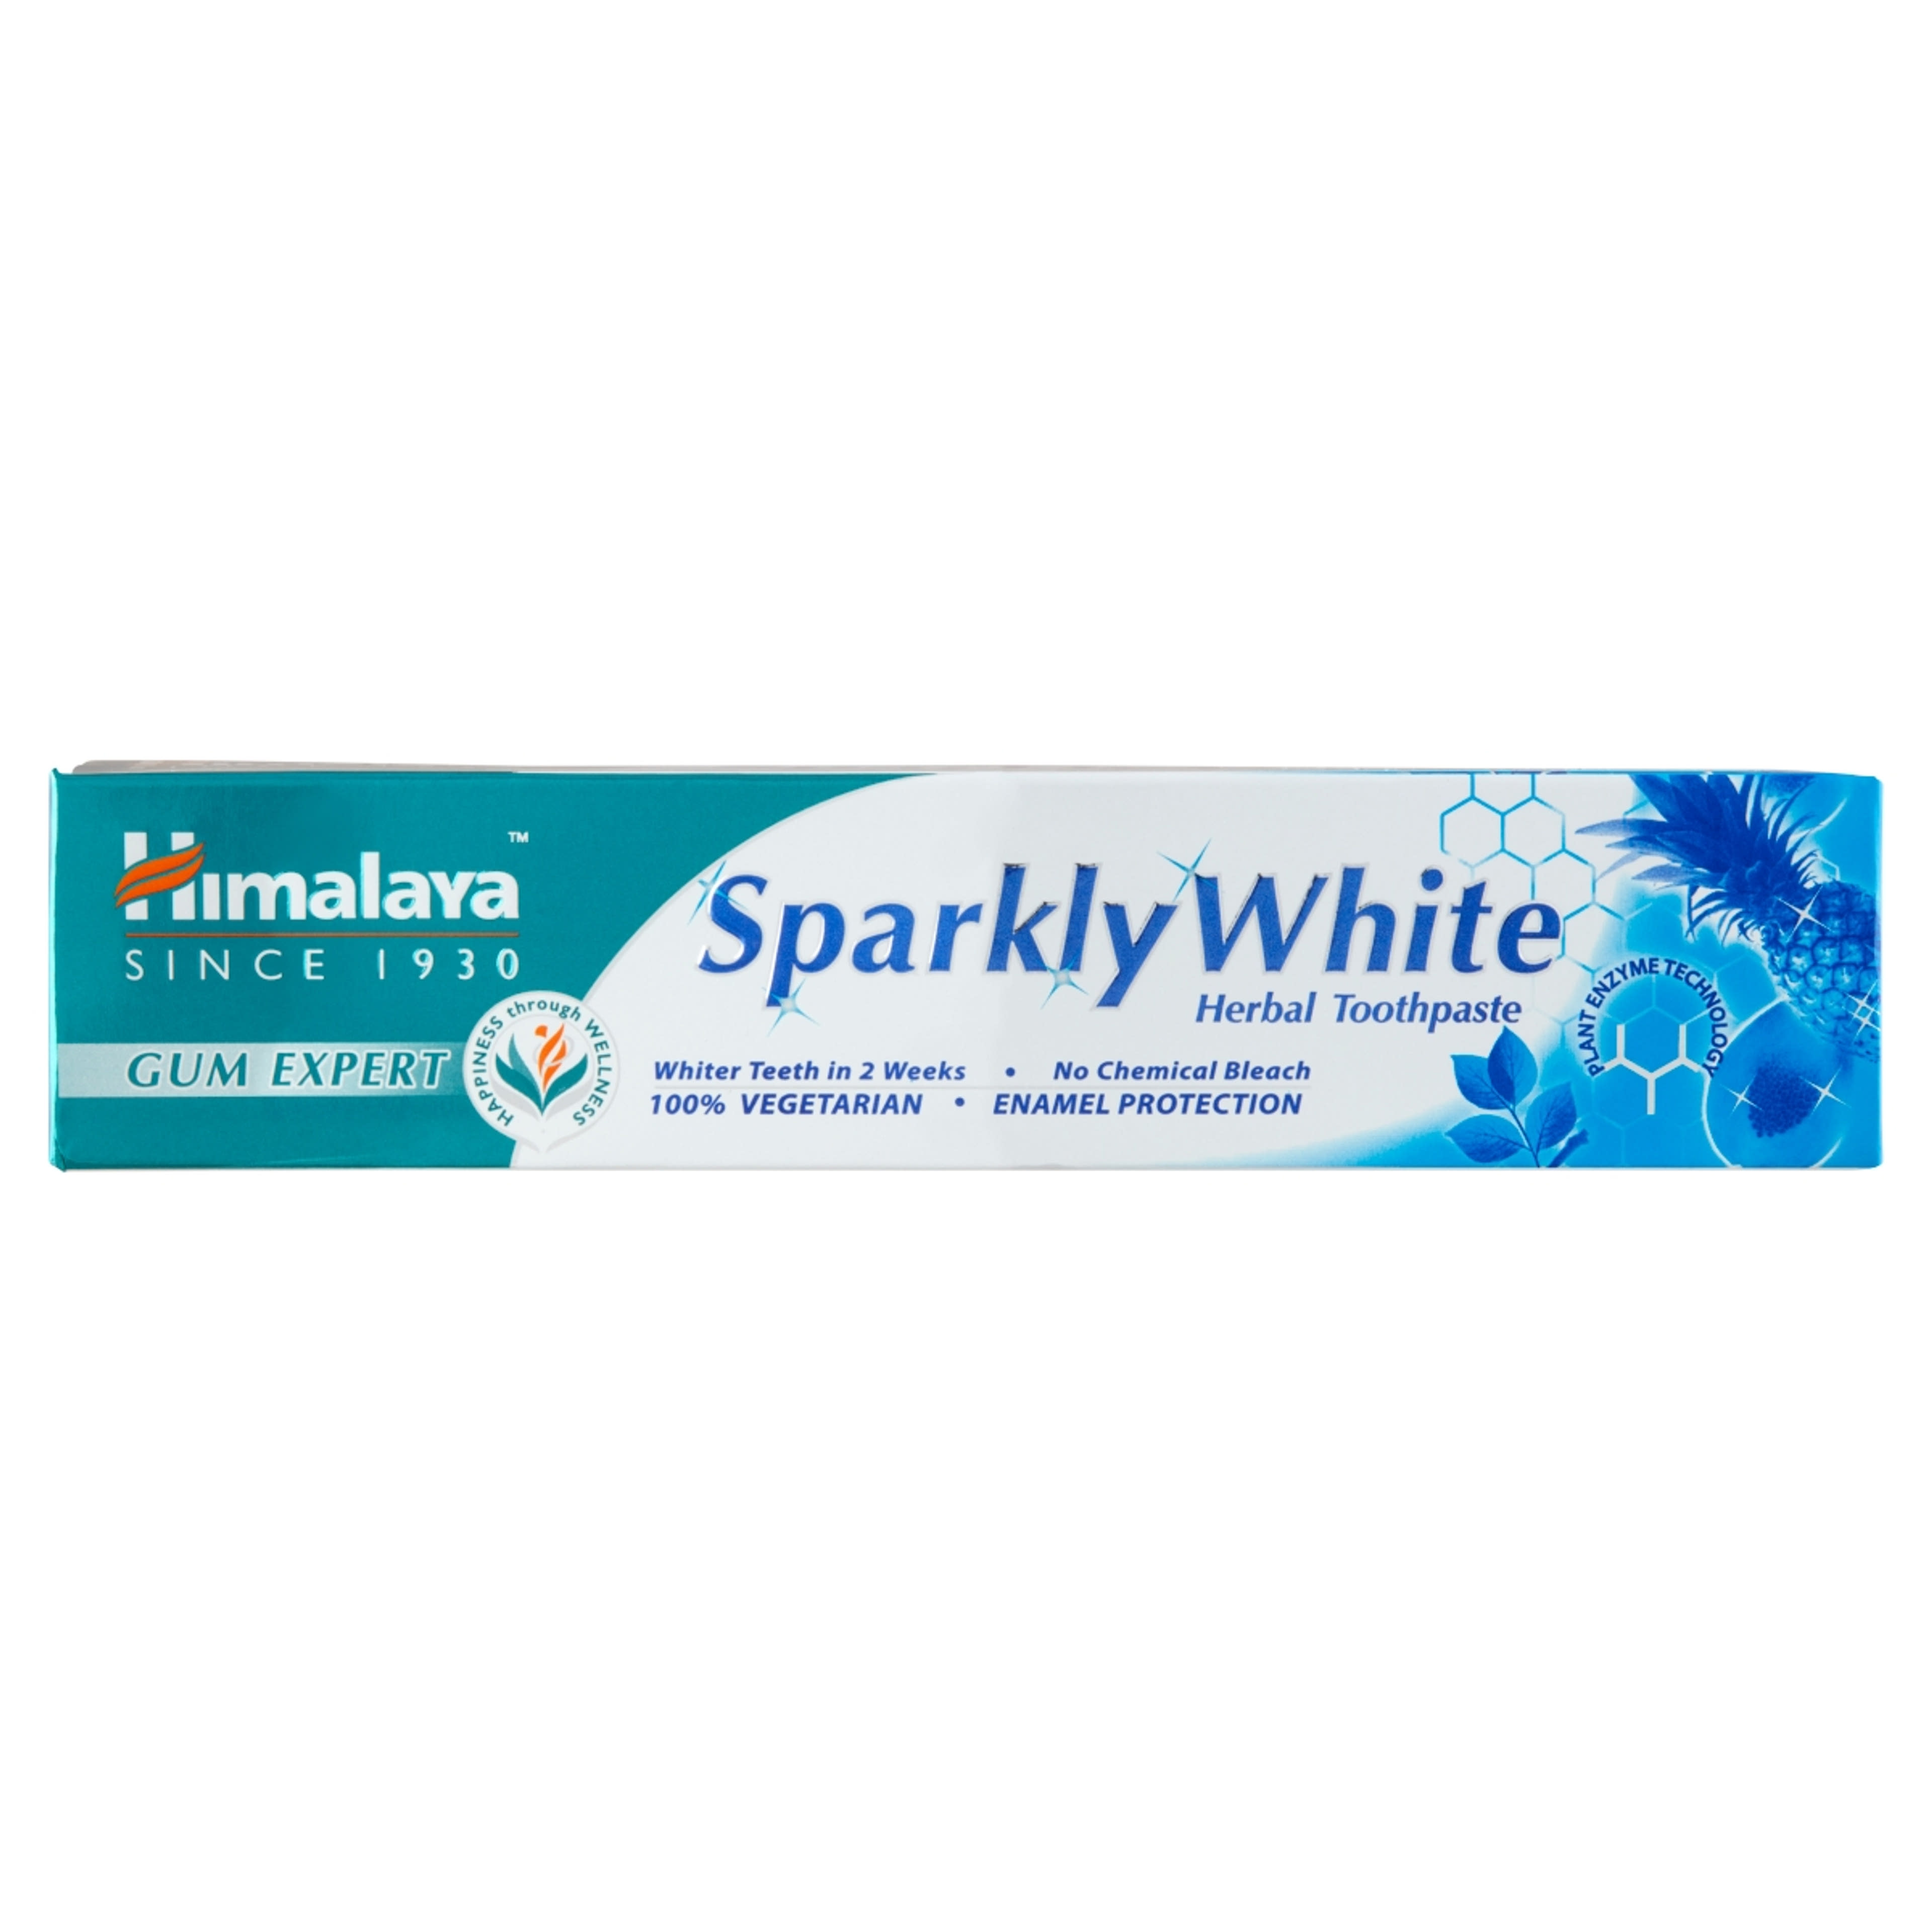 Himalaya Gum Expert Sparkly White fogkrém - 75 ml-2